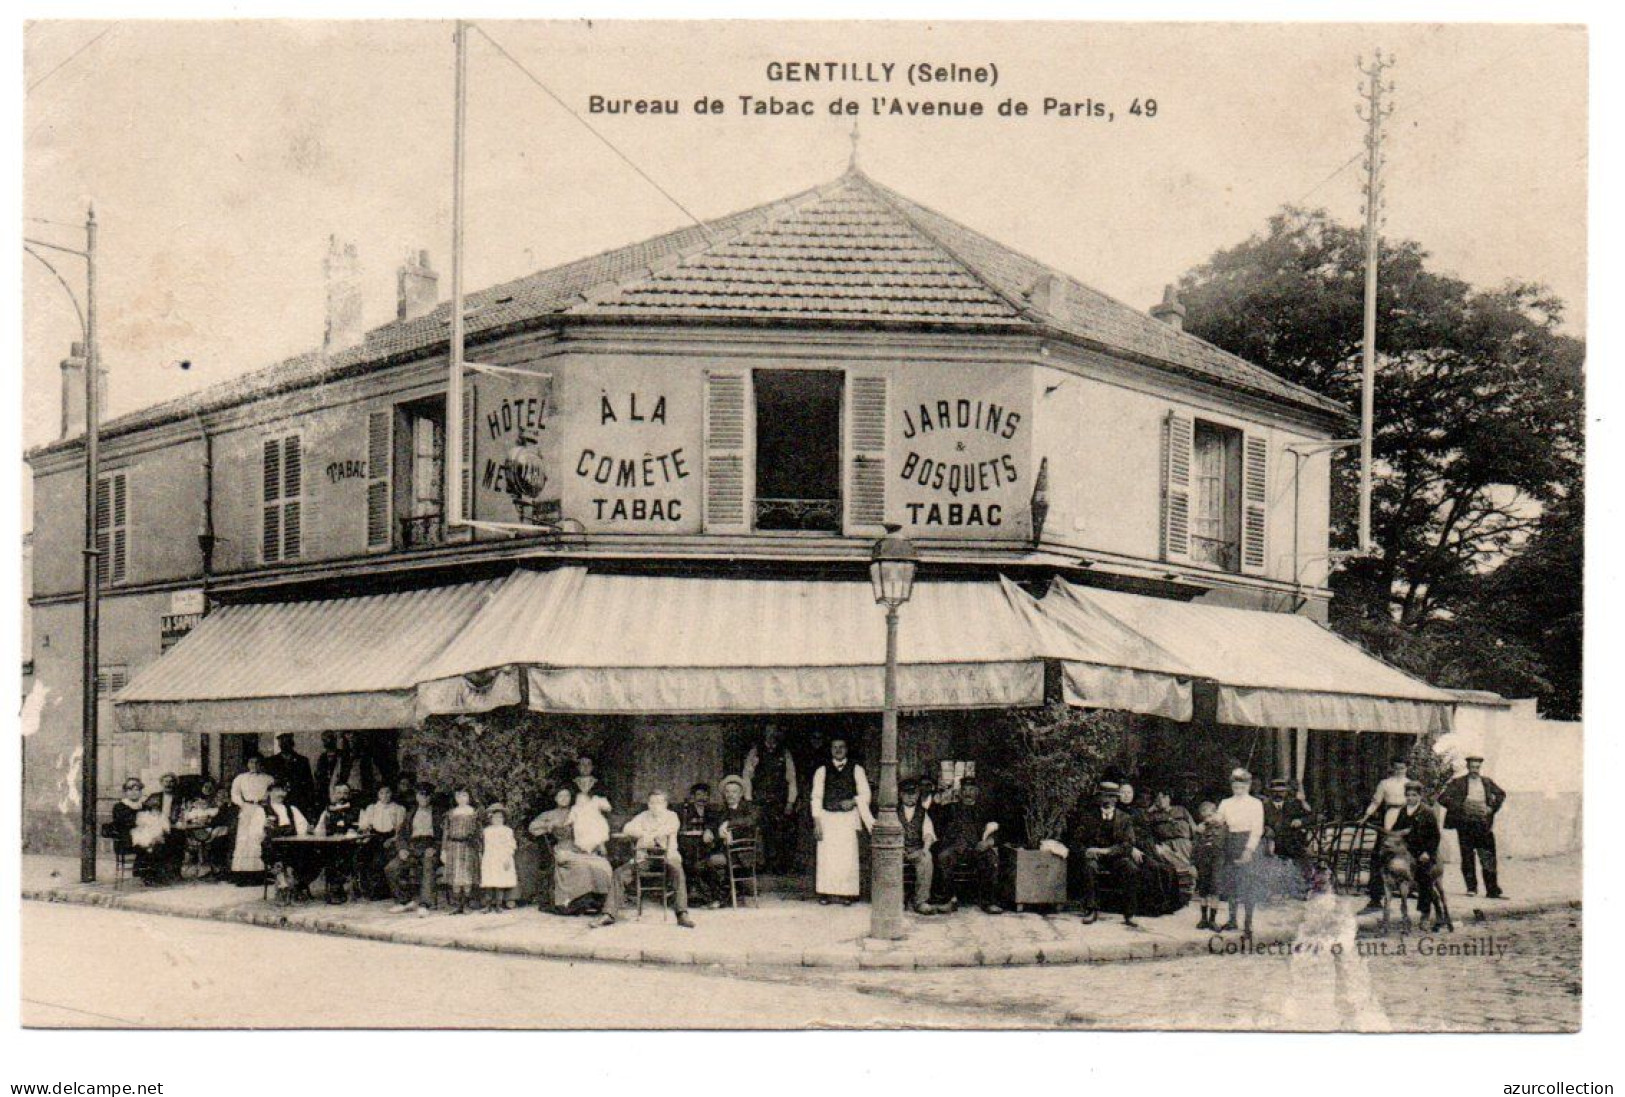 Bureau De Tabac De L'Avenue De Paris. A La Comète - Gentilly